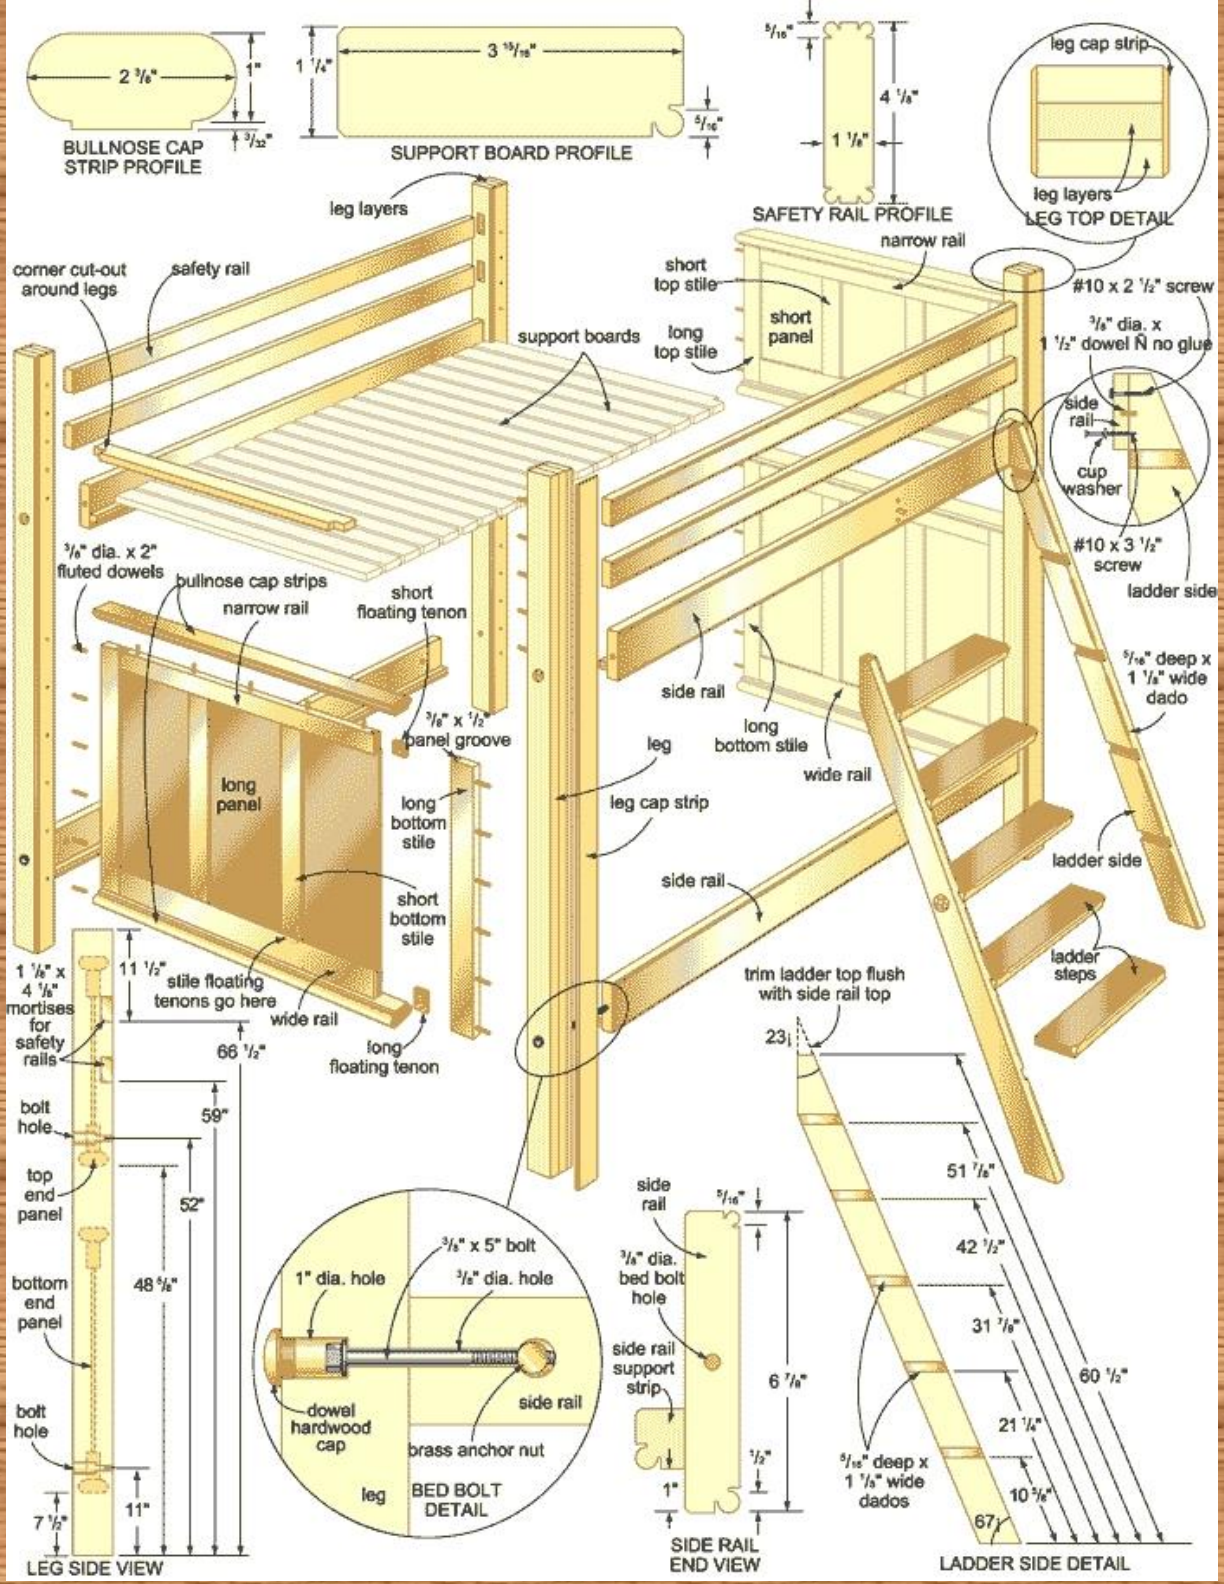 How To Build Bunk Beds Plans Pdf, Star Wars Bunk Bed Plans Pdf